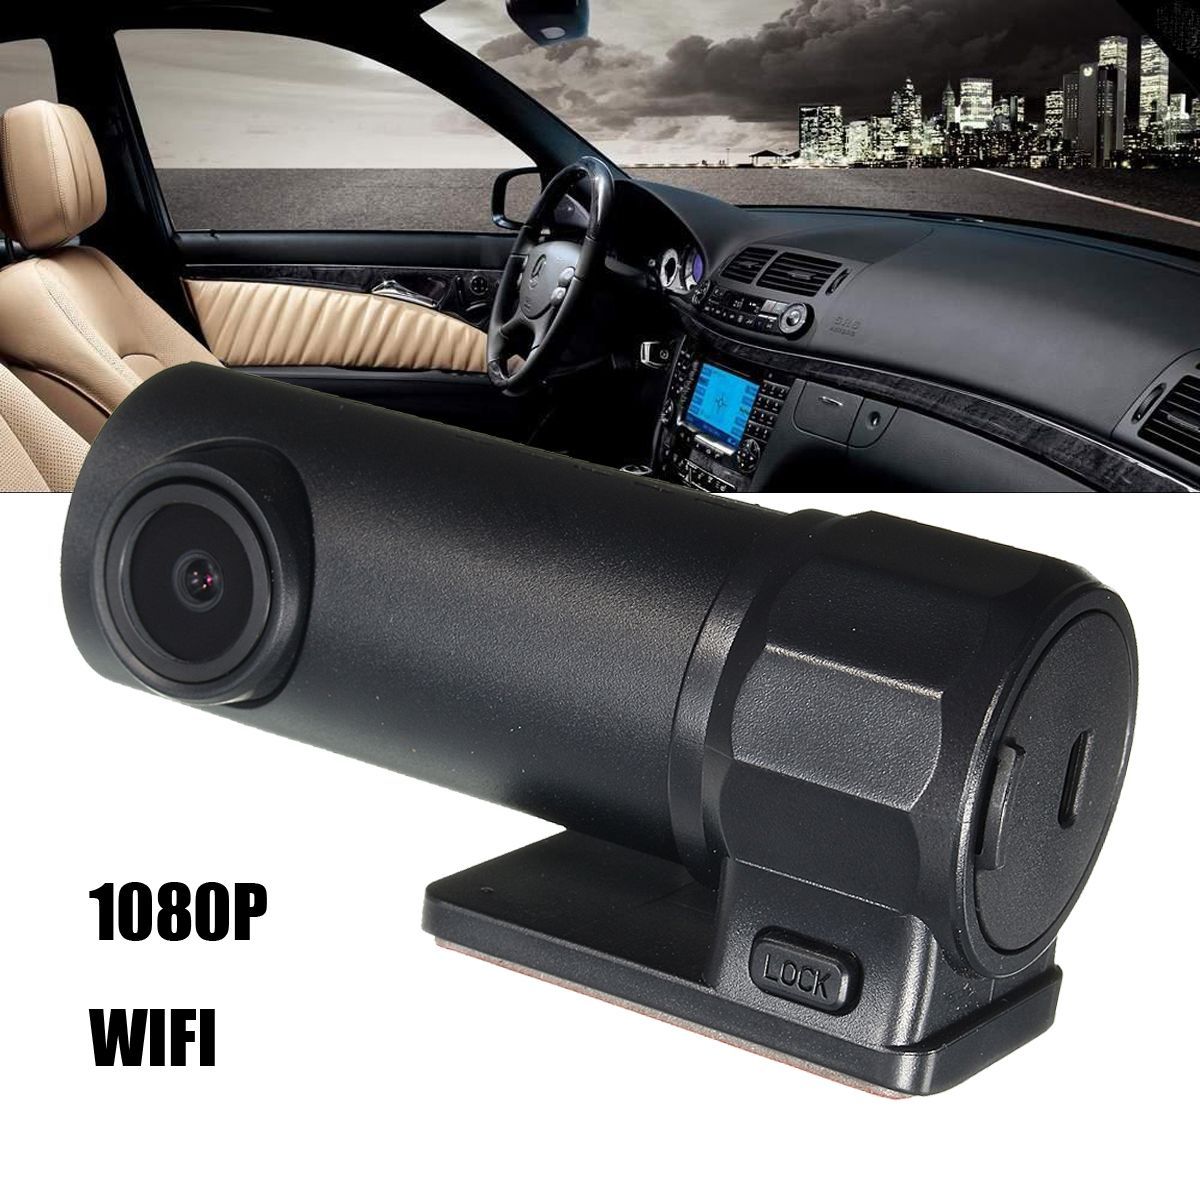 1080P-Wifi-Mini-32G-Car-DVR-Video-Camera-Recorder-170deg-Visione-Notturna-G-sensor-1153469